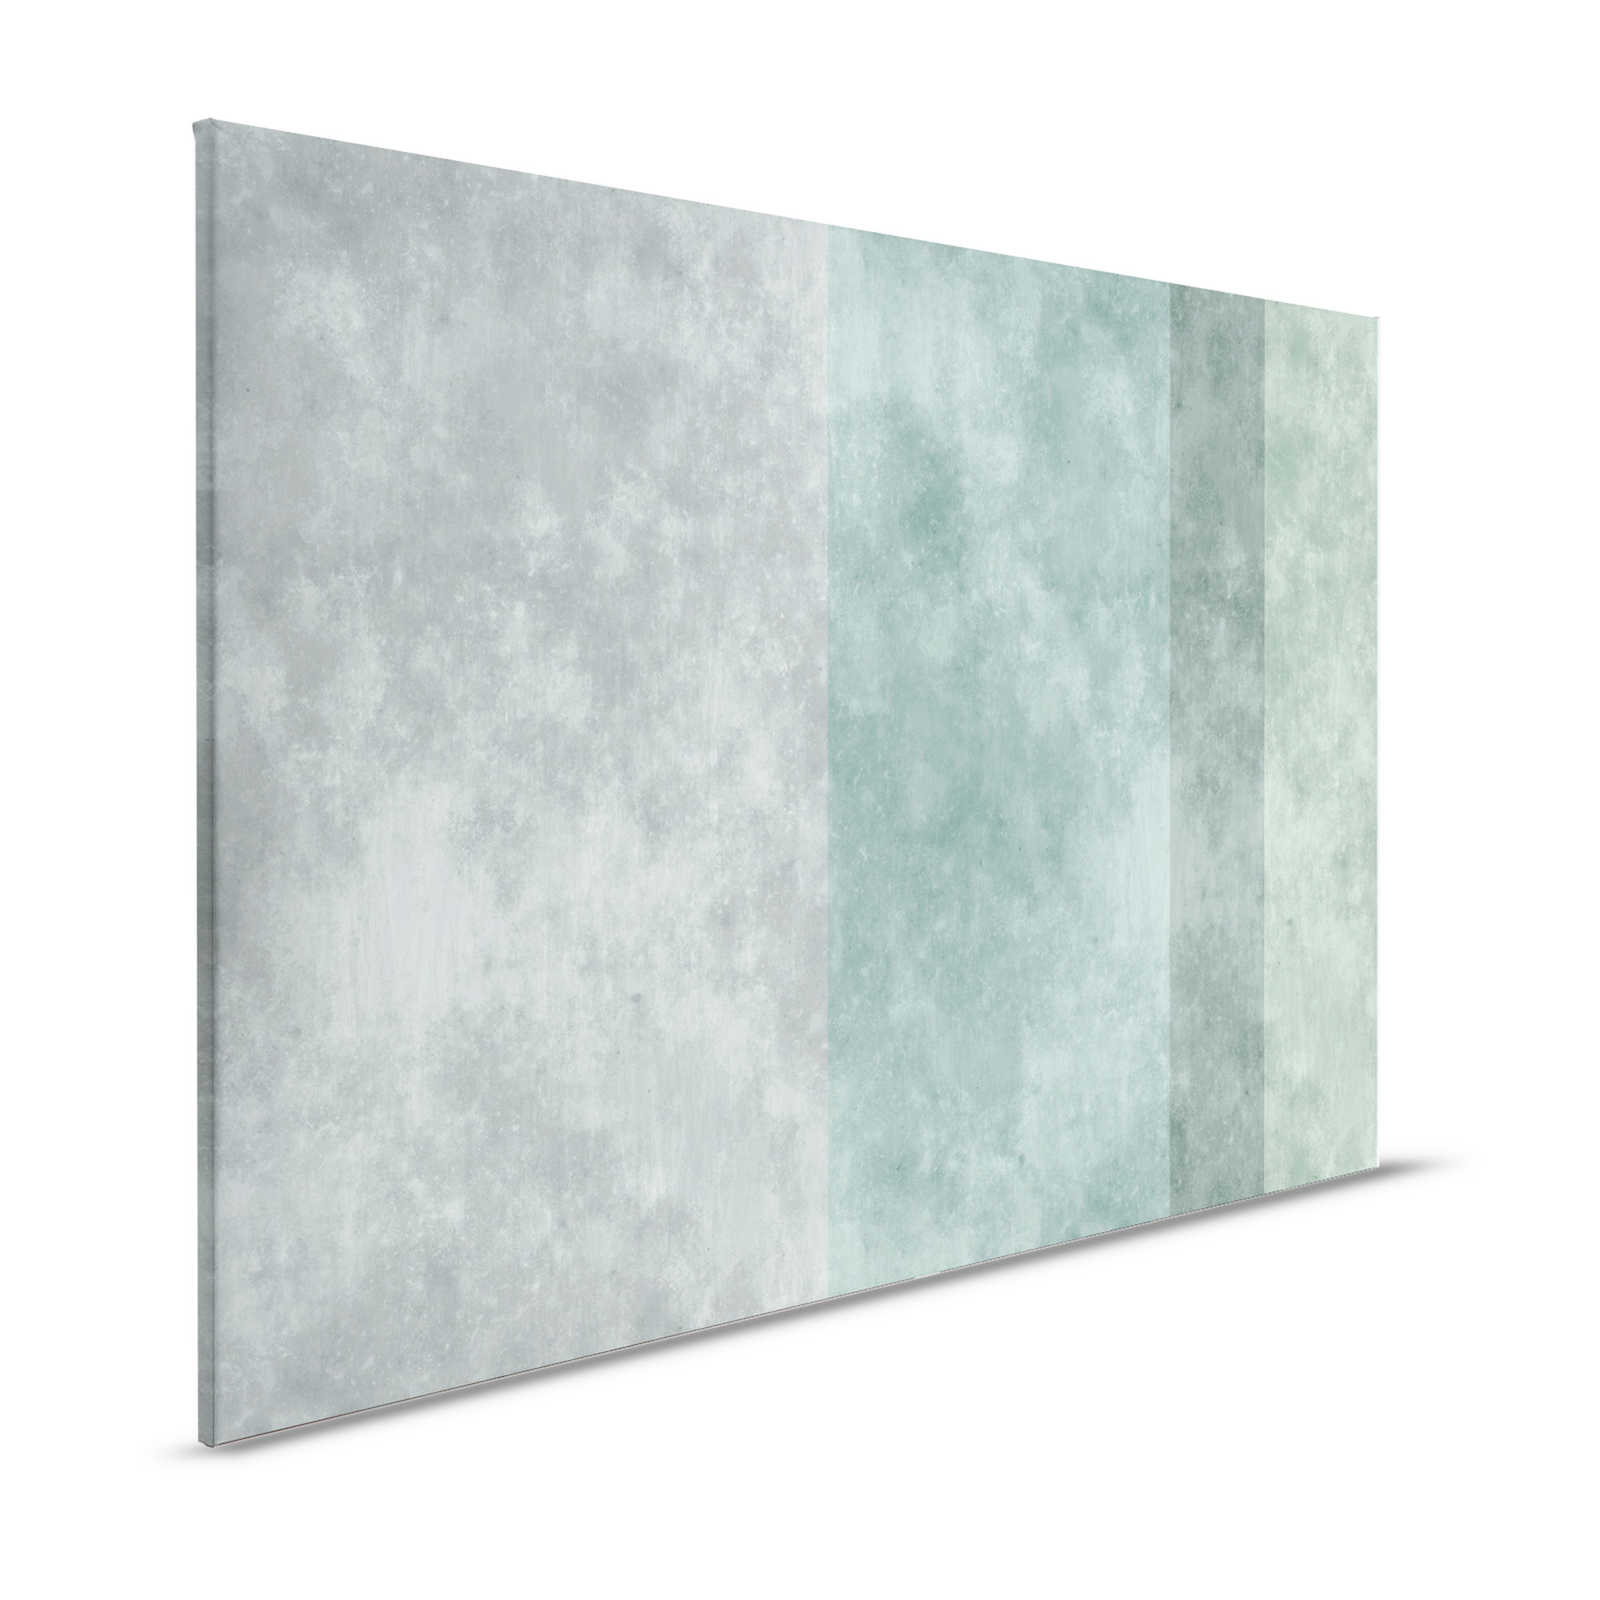 Concrete-look canvas picture with stripes | grey, blue - 1.20 m x 0.80 m
